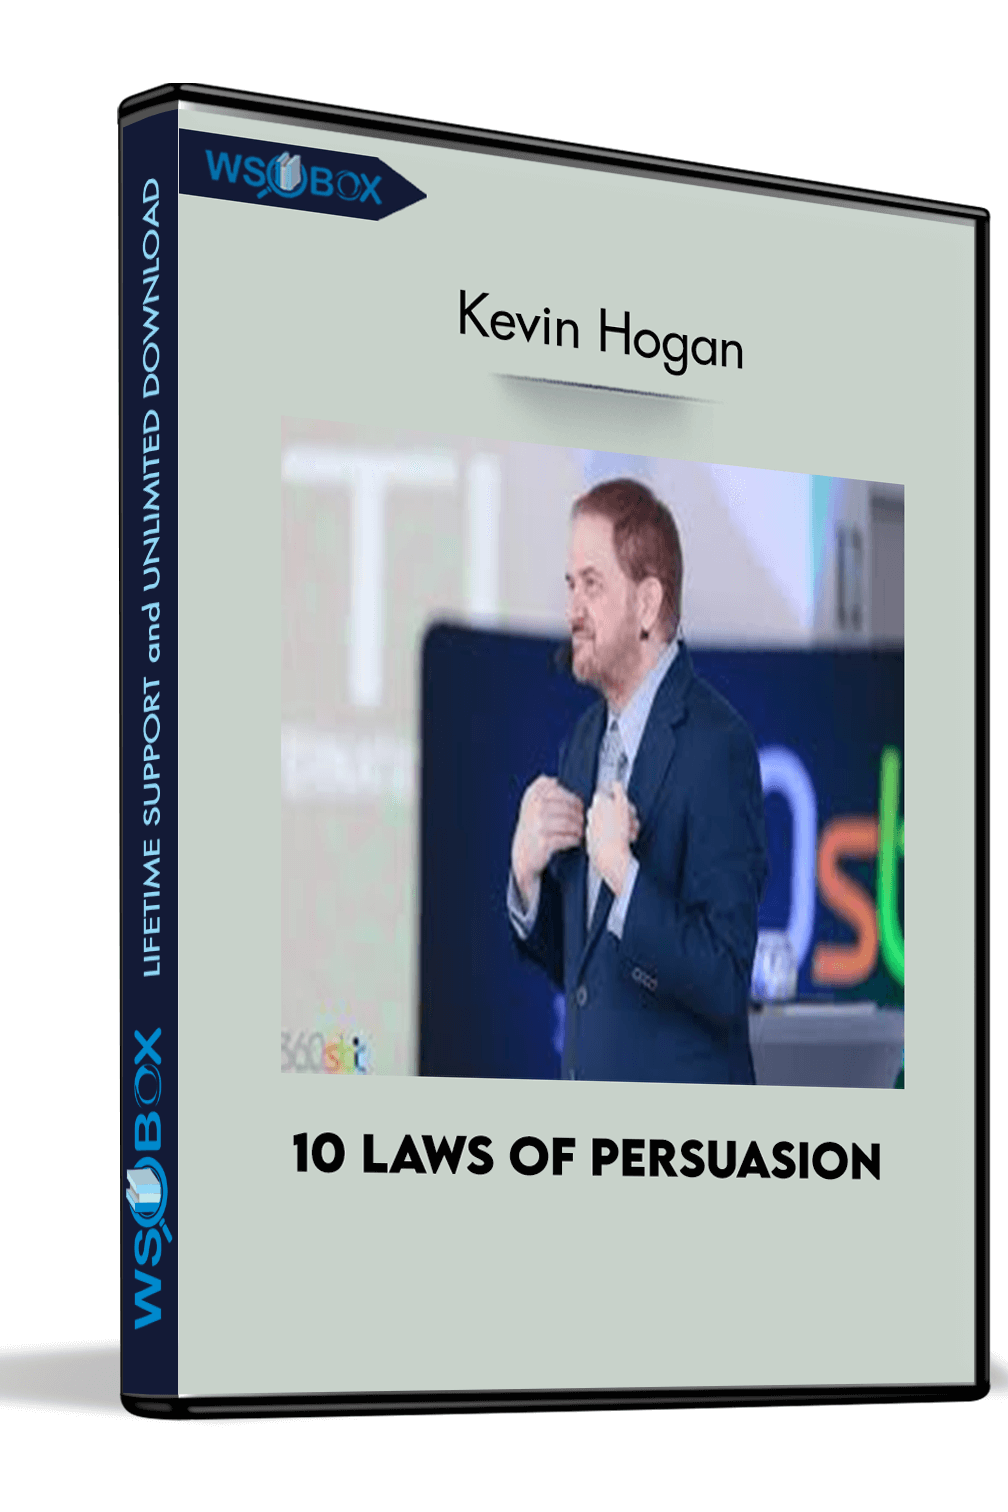 10 Laws of Persuasion - Kevin Hogan